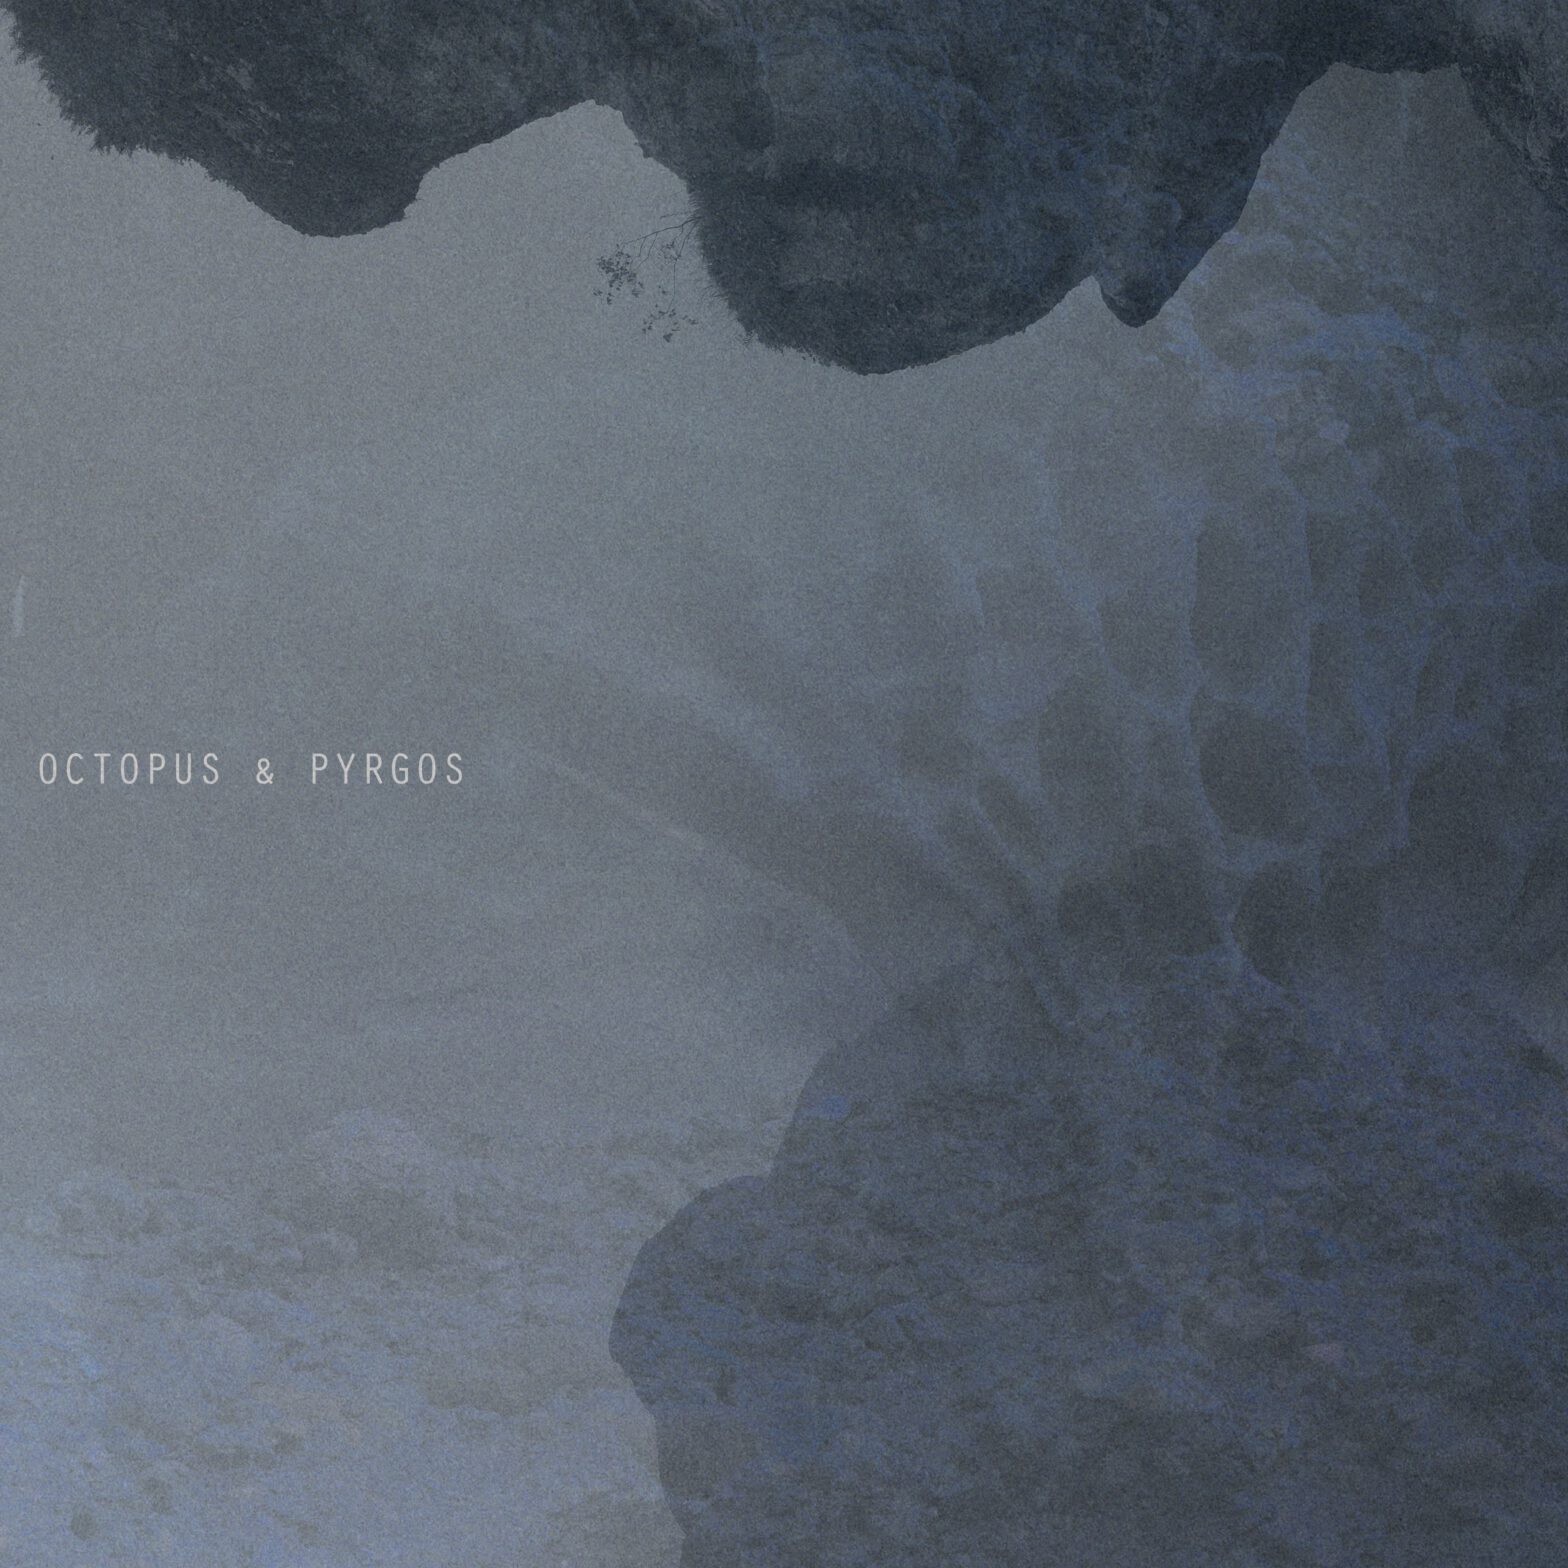 The album cover of "Octopus & Pyrgos" by Marius Mathiszik